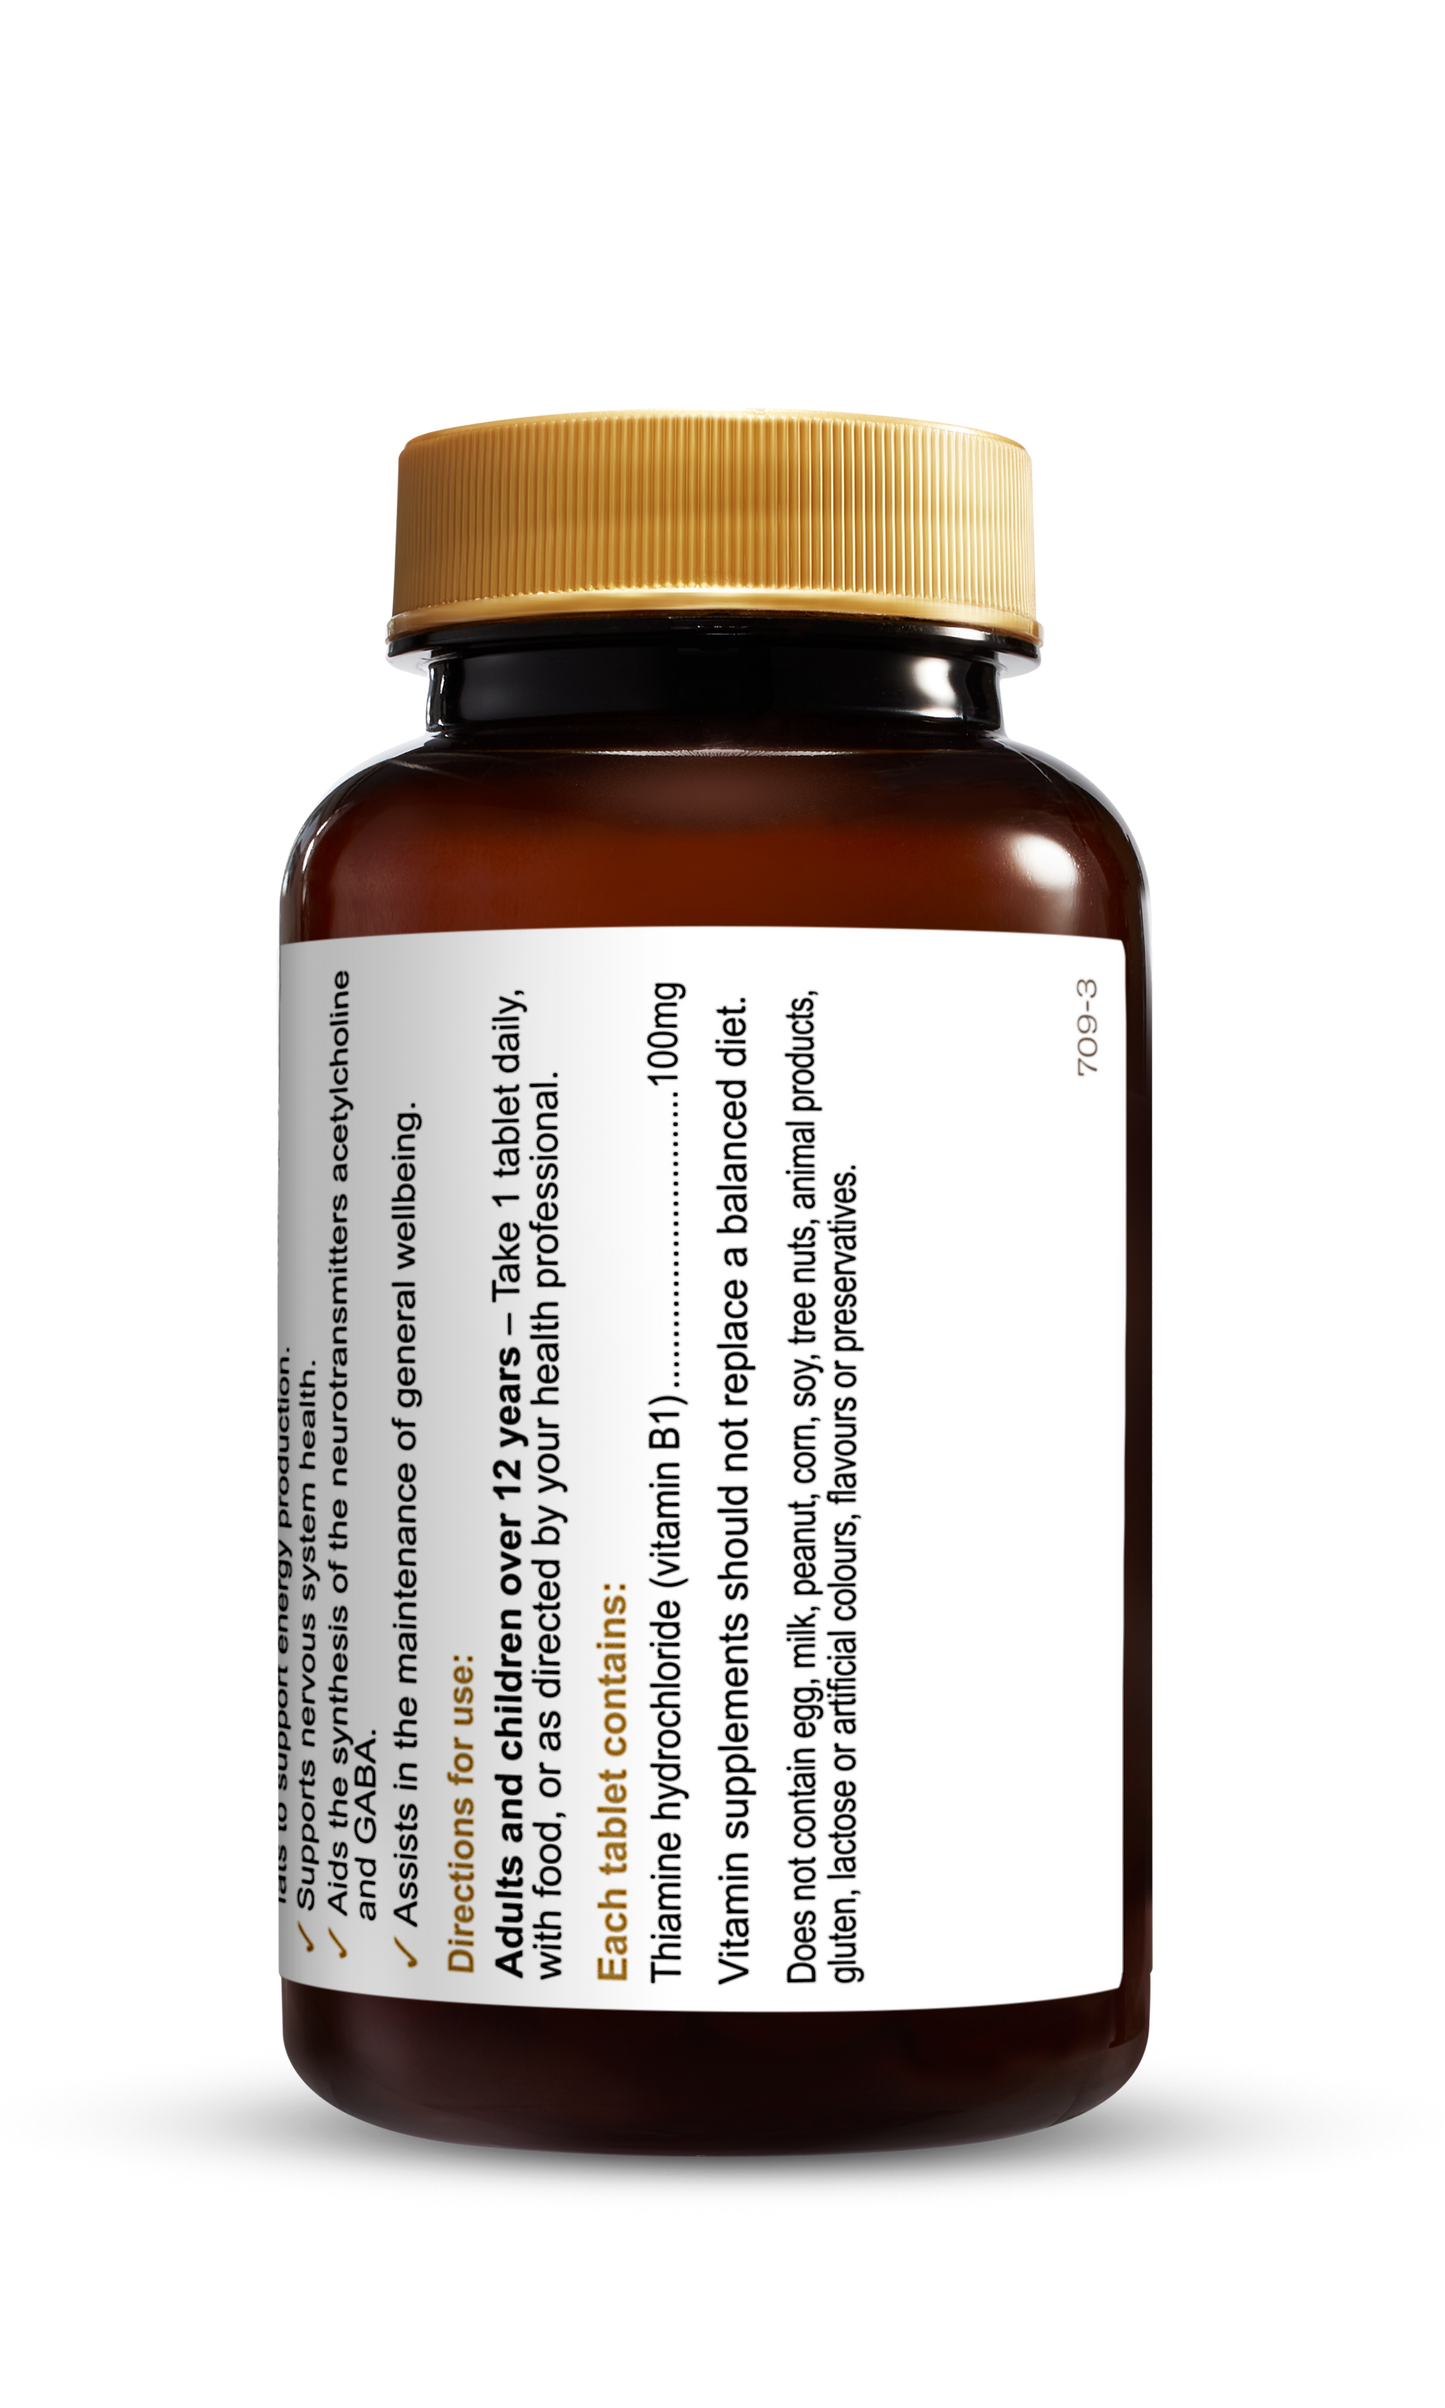 Herbs Of Gold Vitamin B1 100mg 100 Tablets